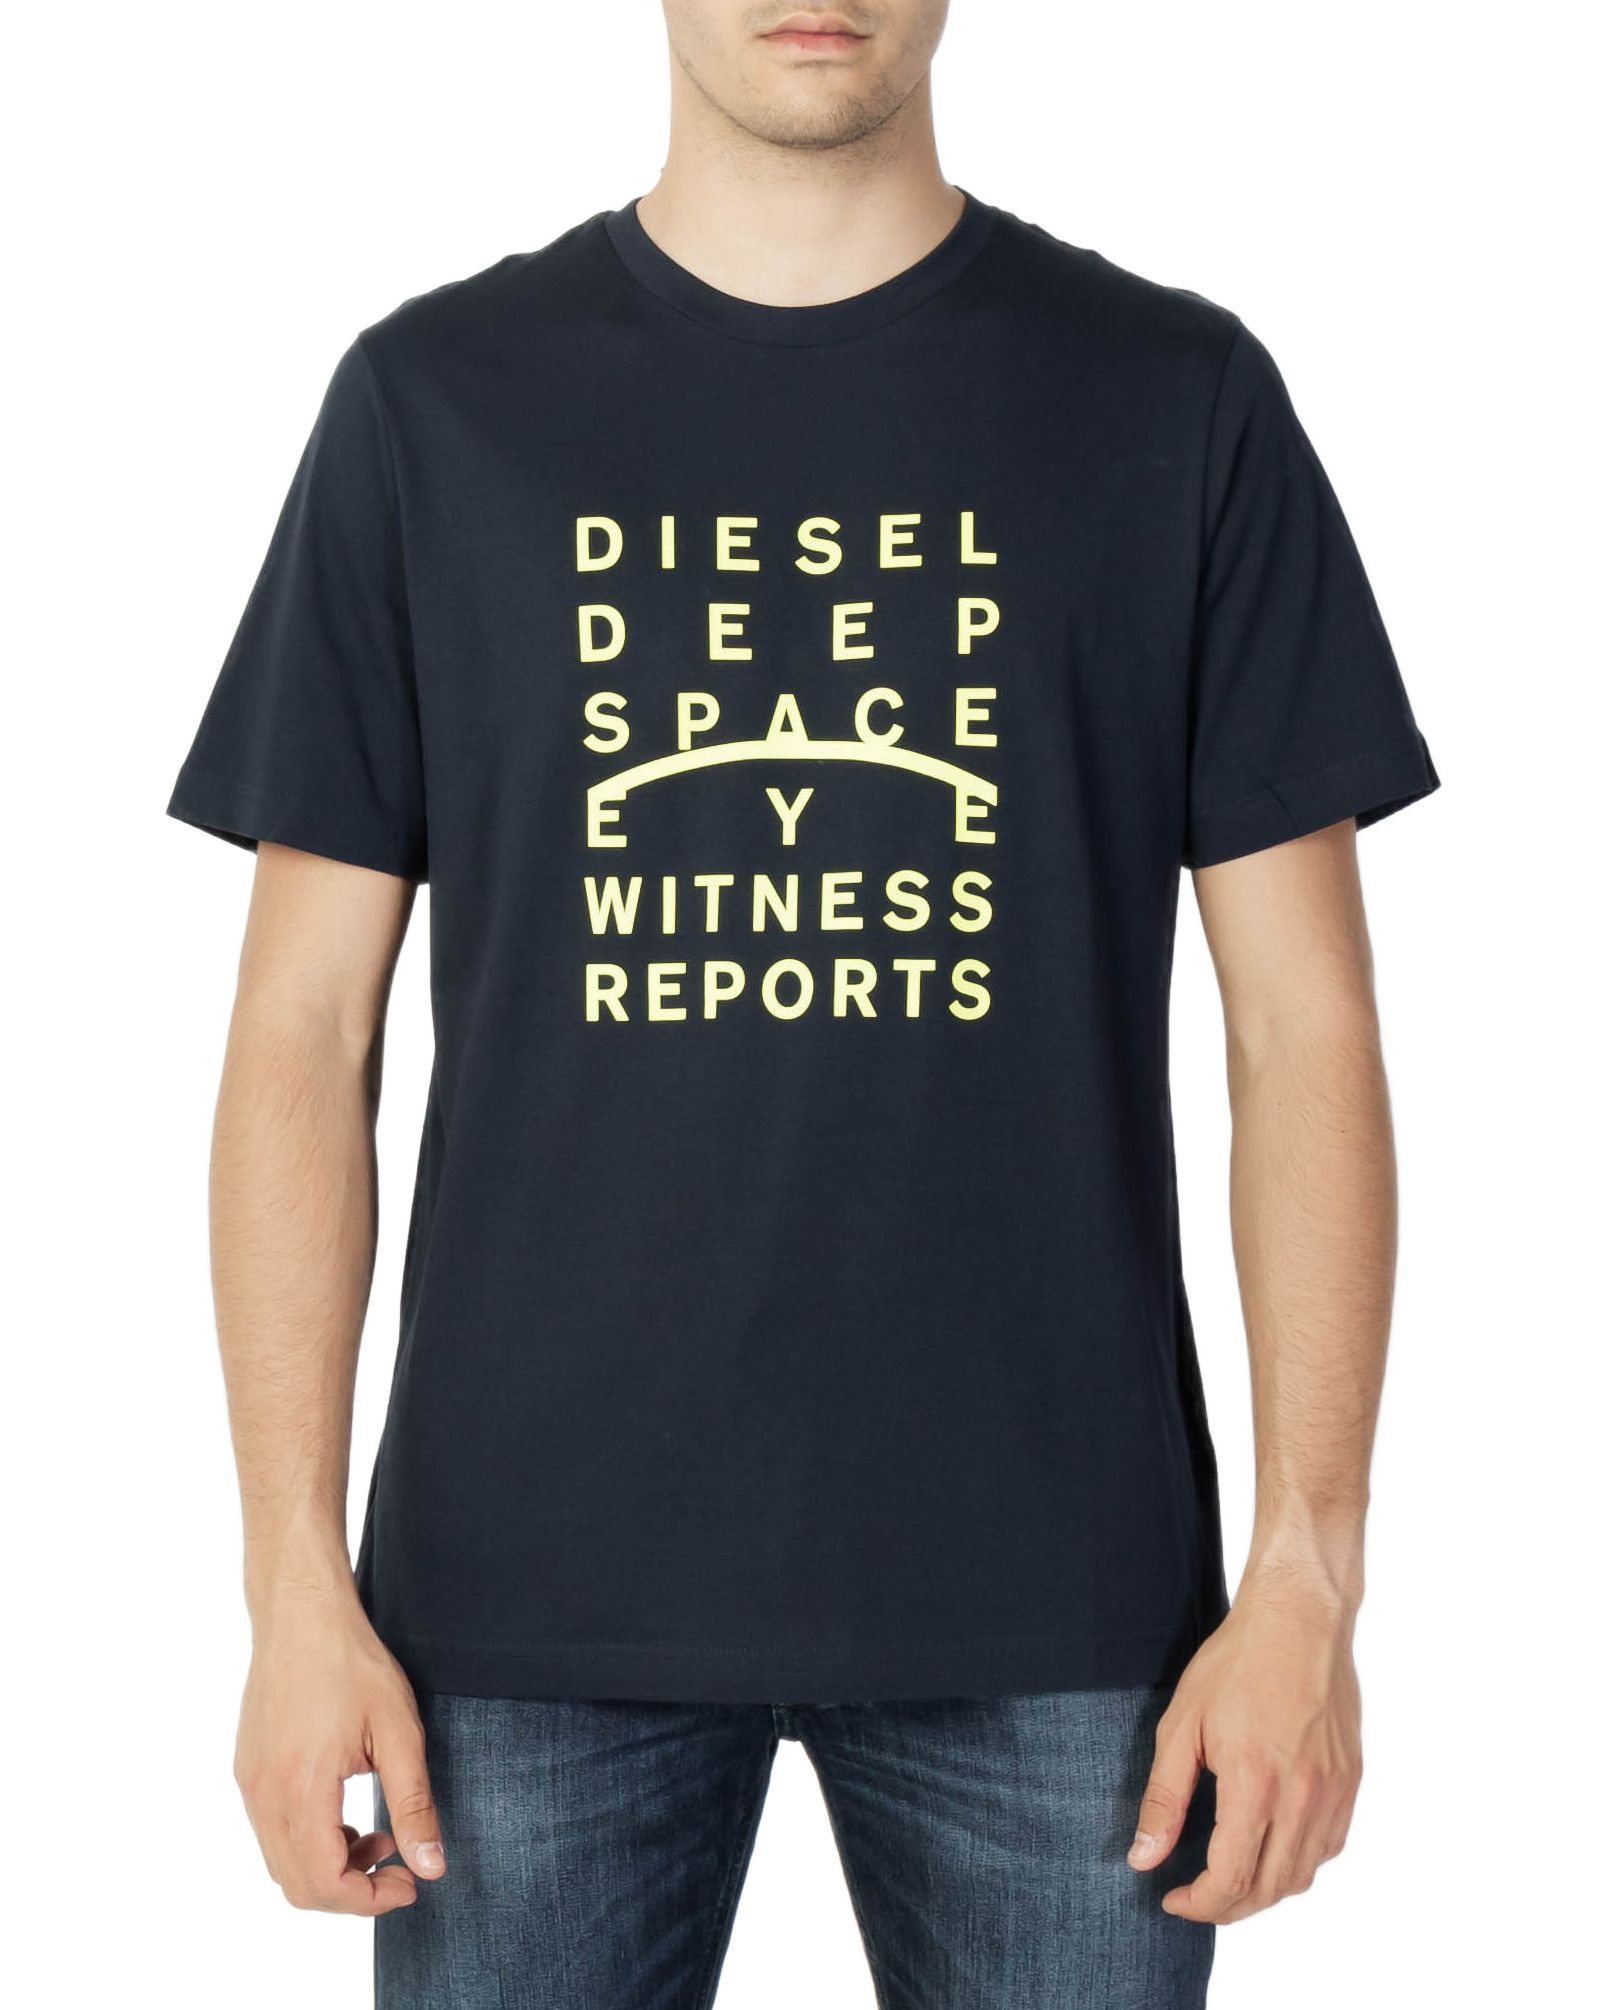 Brand: Diesel   Gender: Men   Type: T-shirts   Color: Blue   Pattern: Print   Neckline: Round Neck   Sleeves: Short Sleeve   Fastening: Slip On   Season: Spring/summer